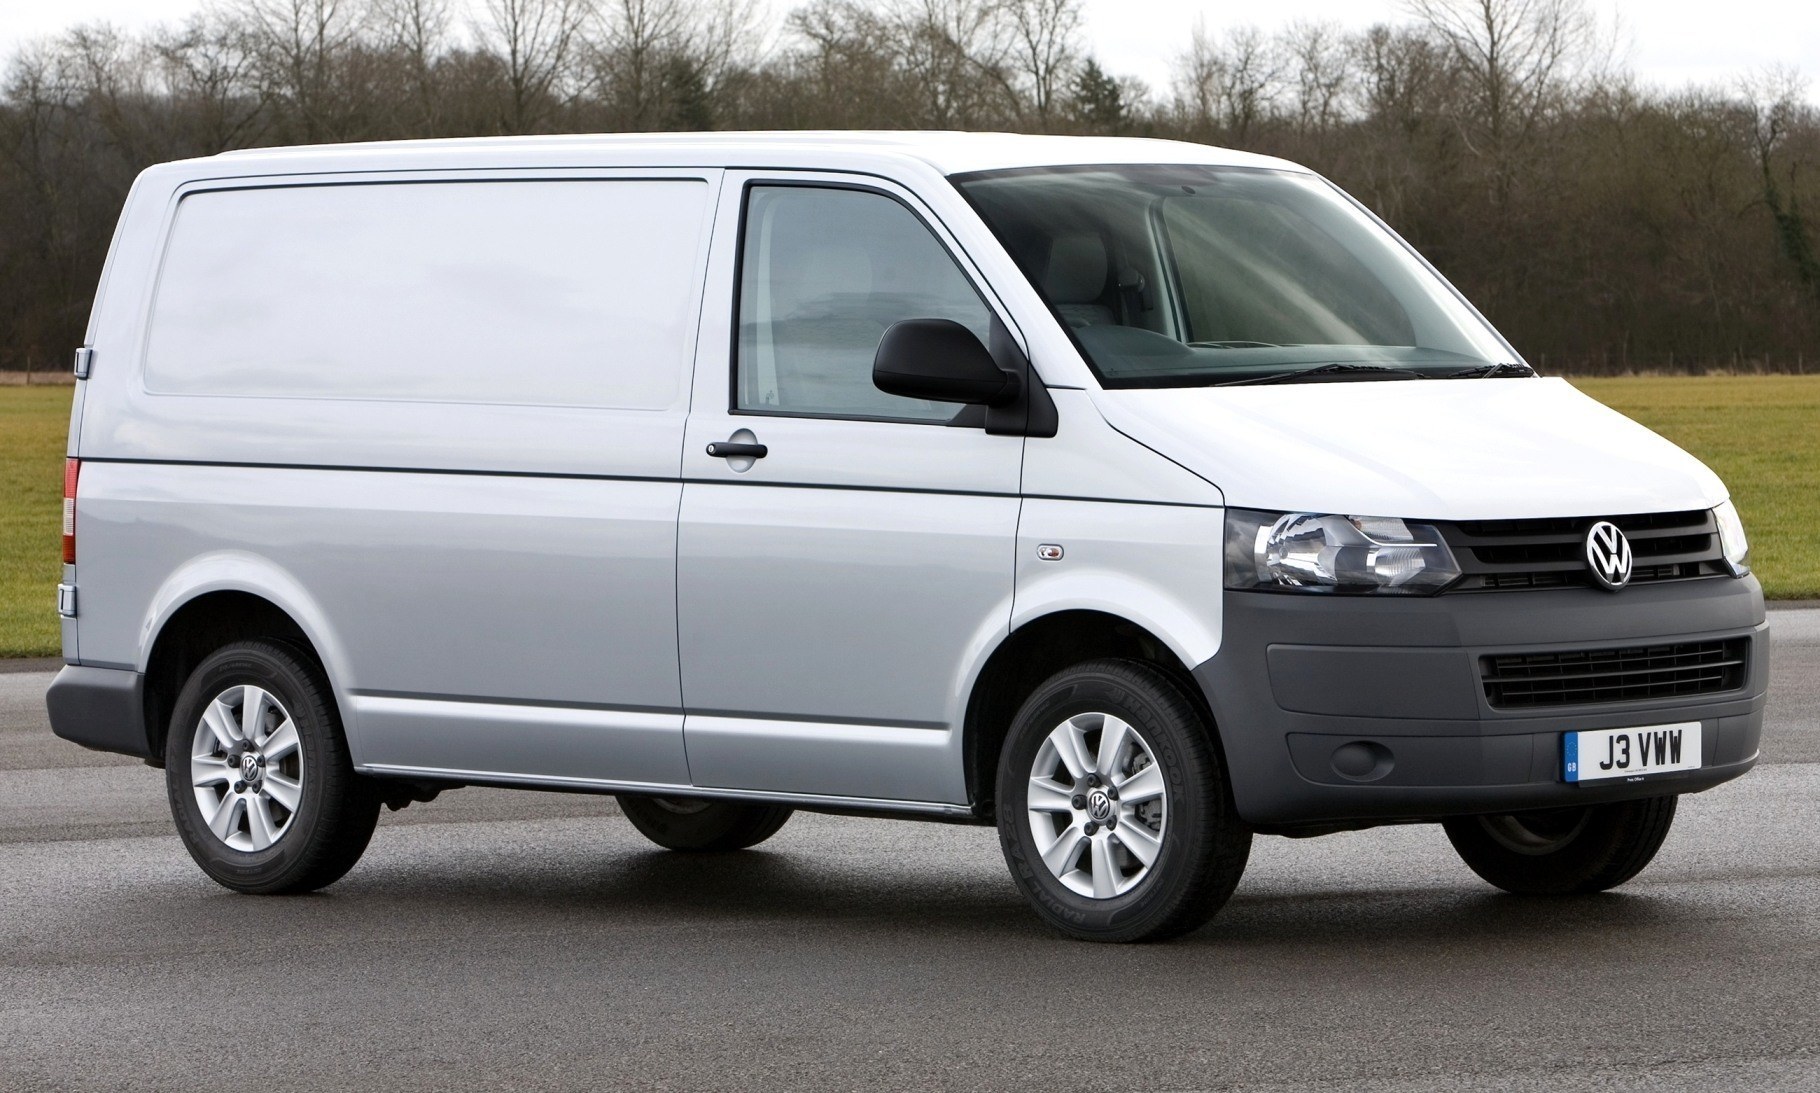 Work Van Legend Turns 60 in UK This Year